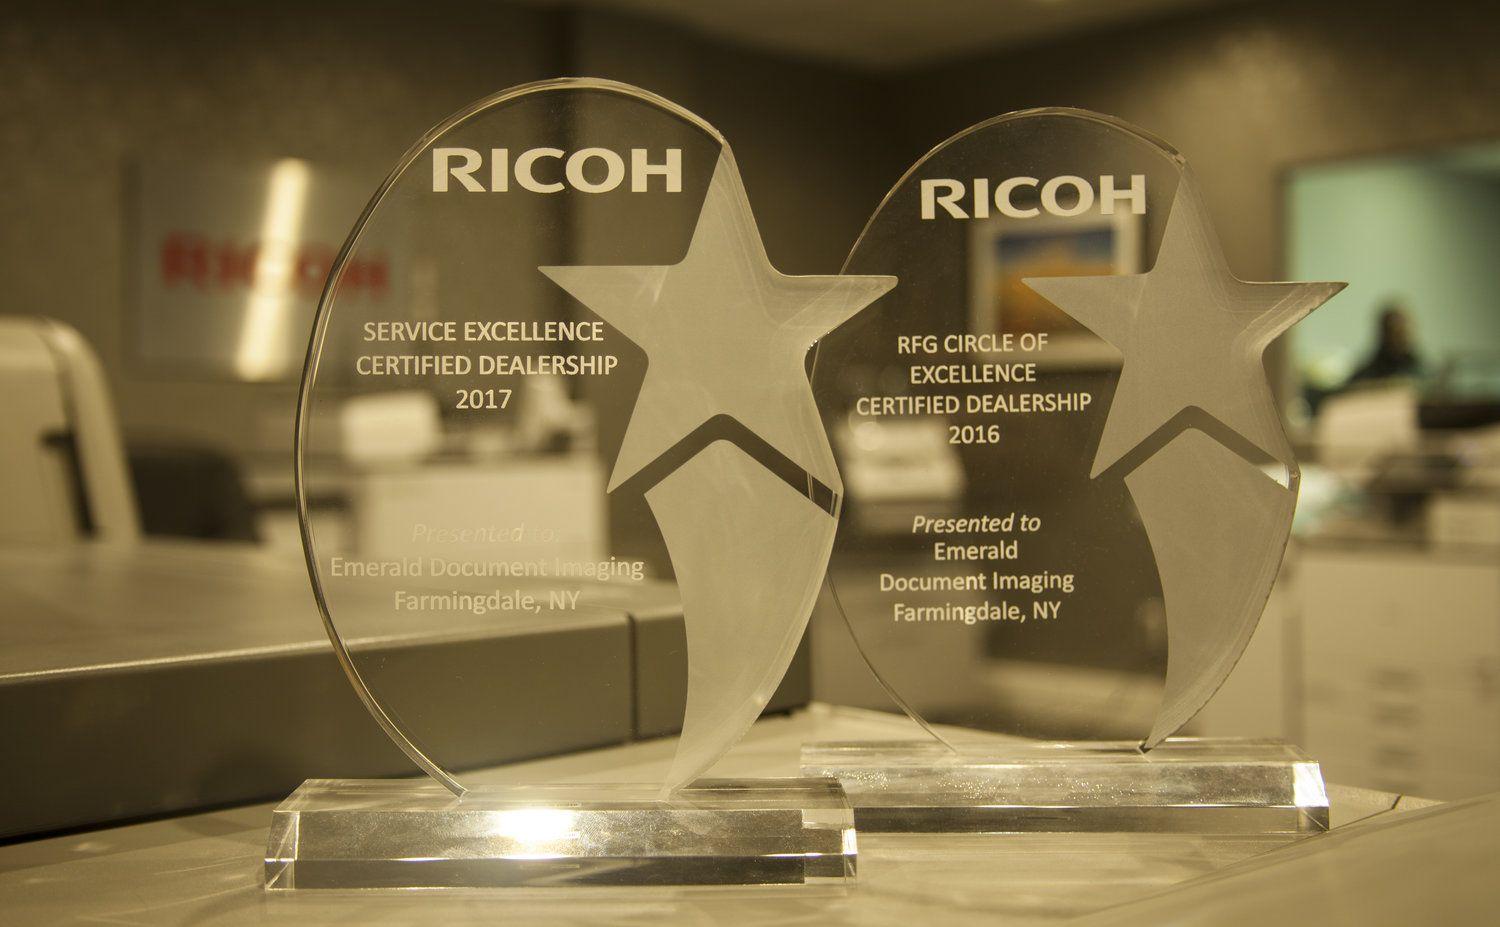 Ricoh Service Excellence Logo - Emerald Wins Ricoh's Service Excellence Award Two Years in a Row